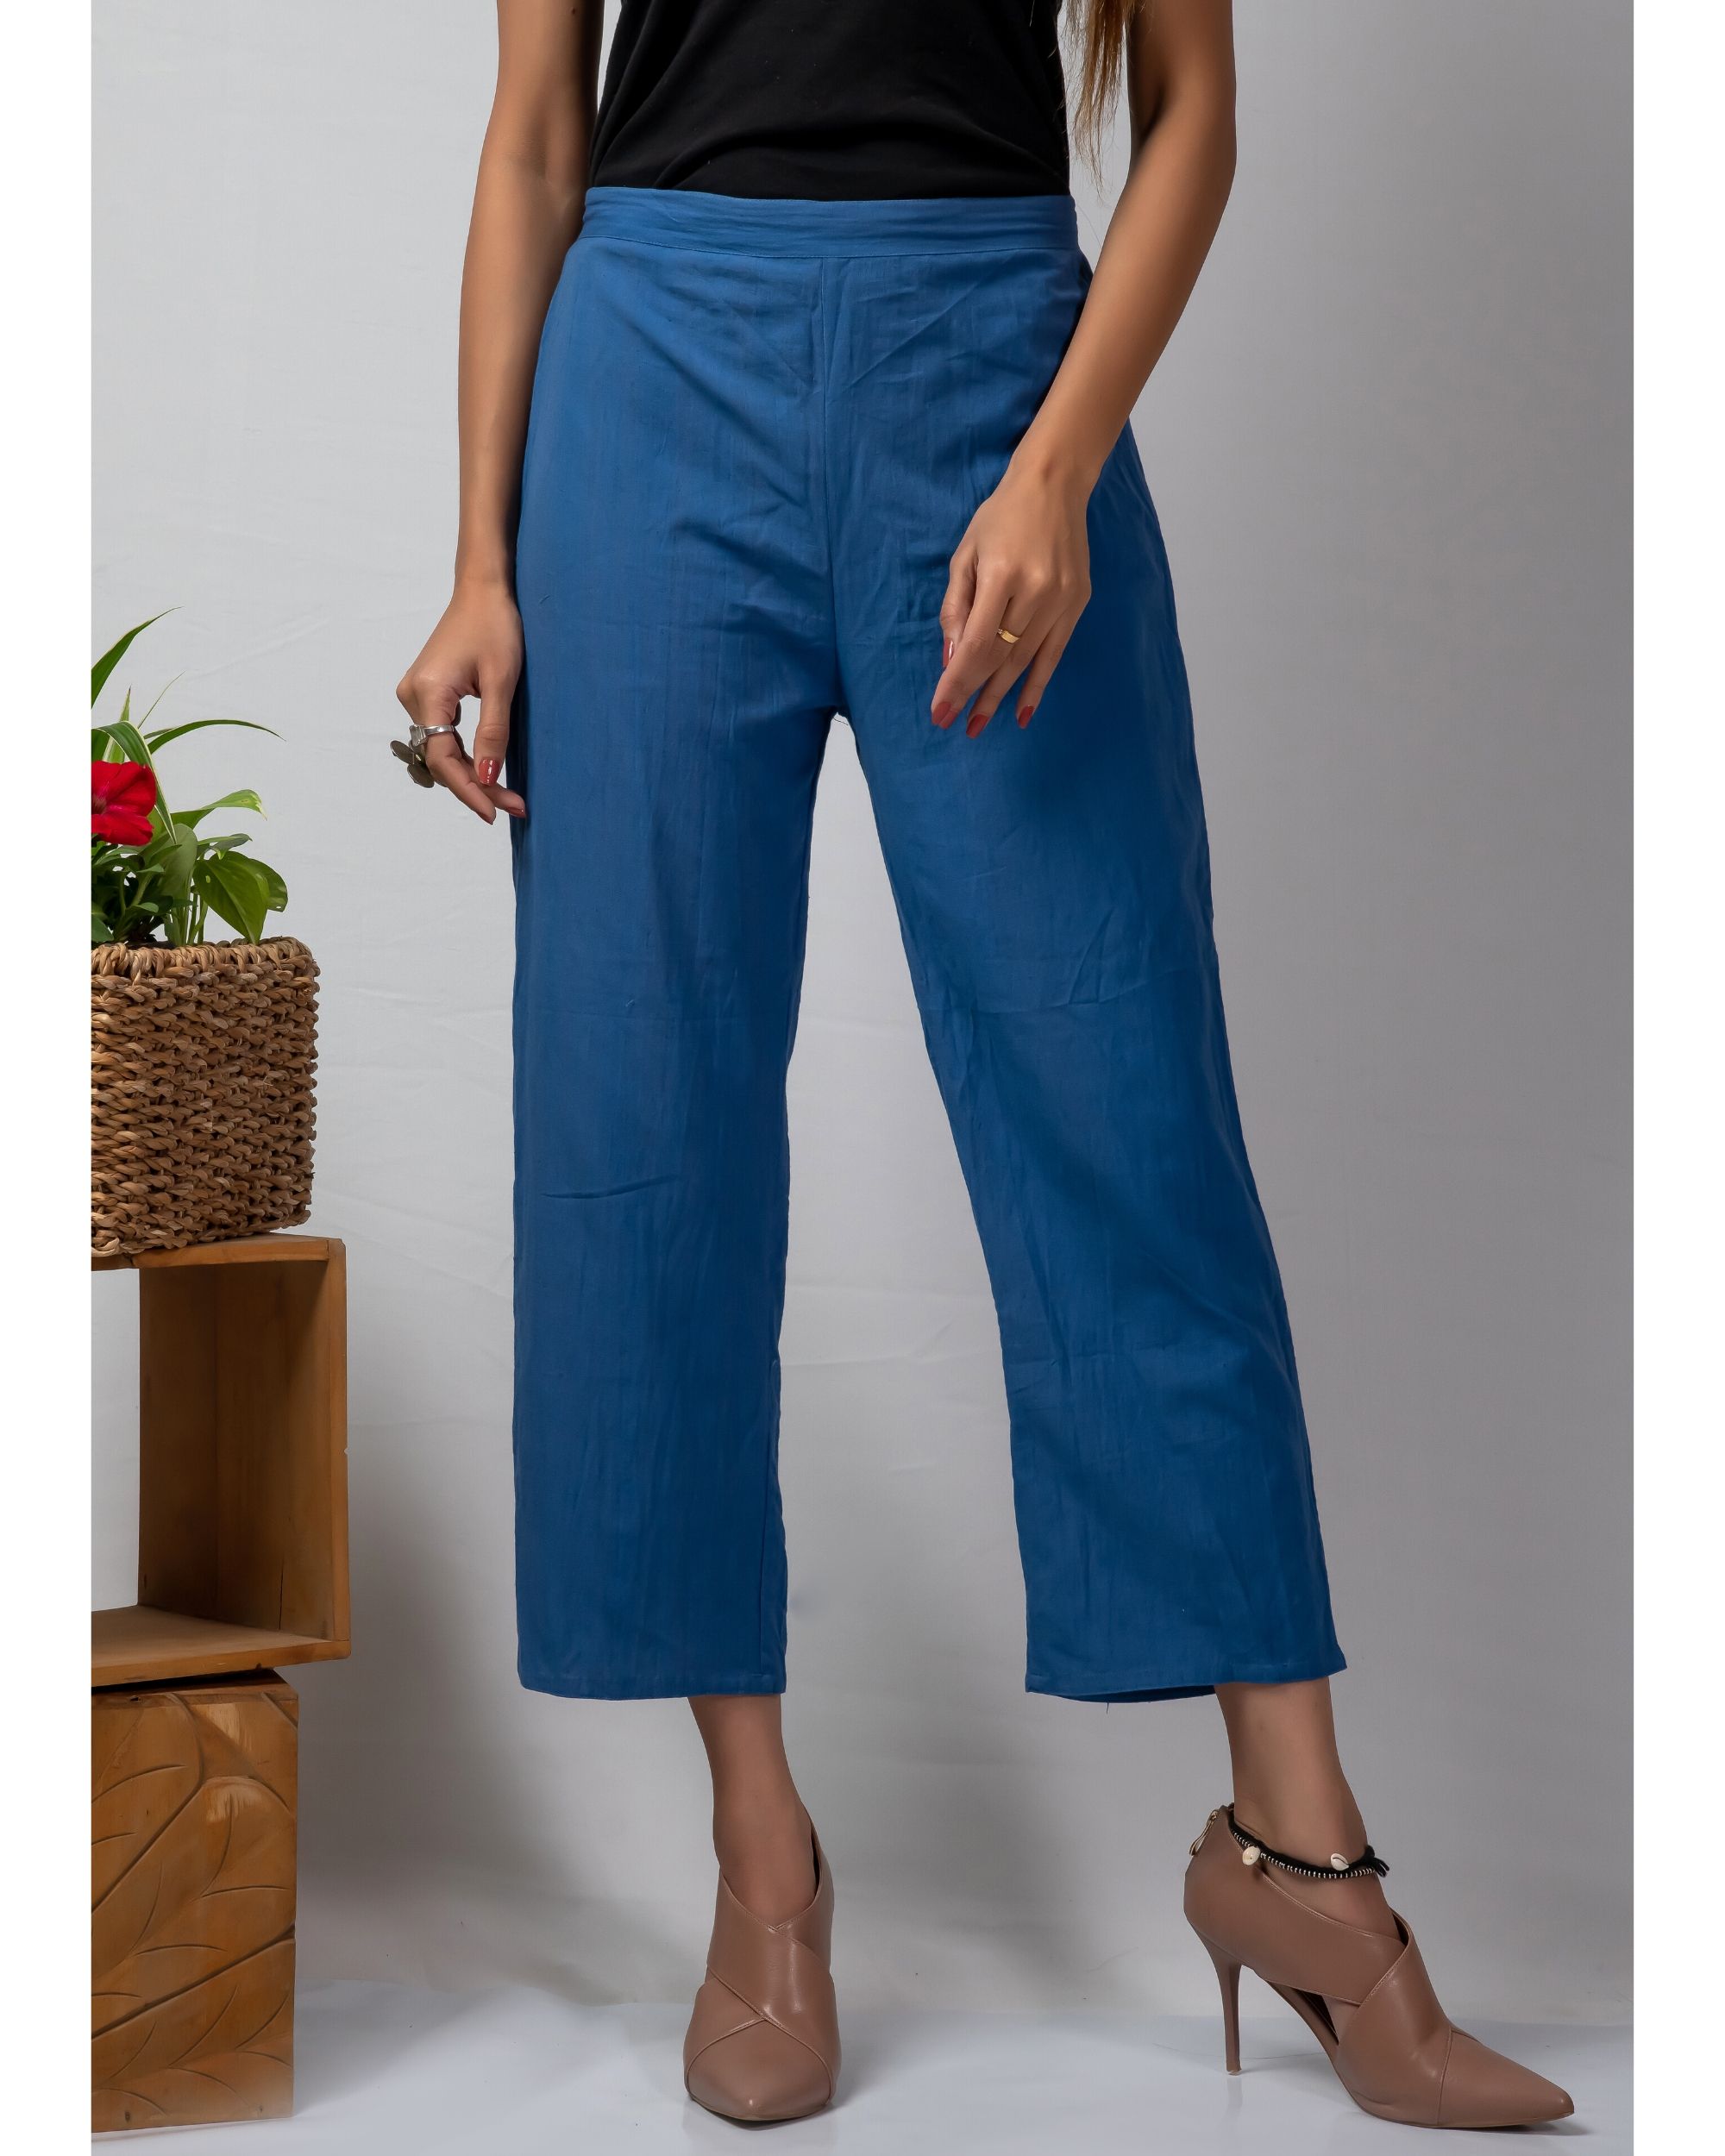 Blue straight cotton pants by Silai | The Secret Label